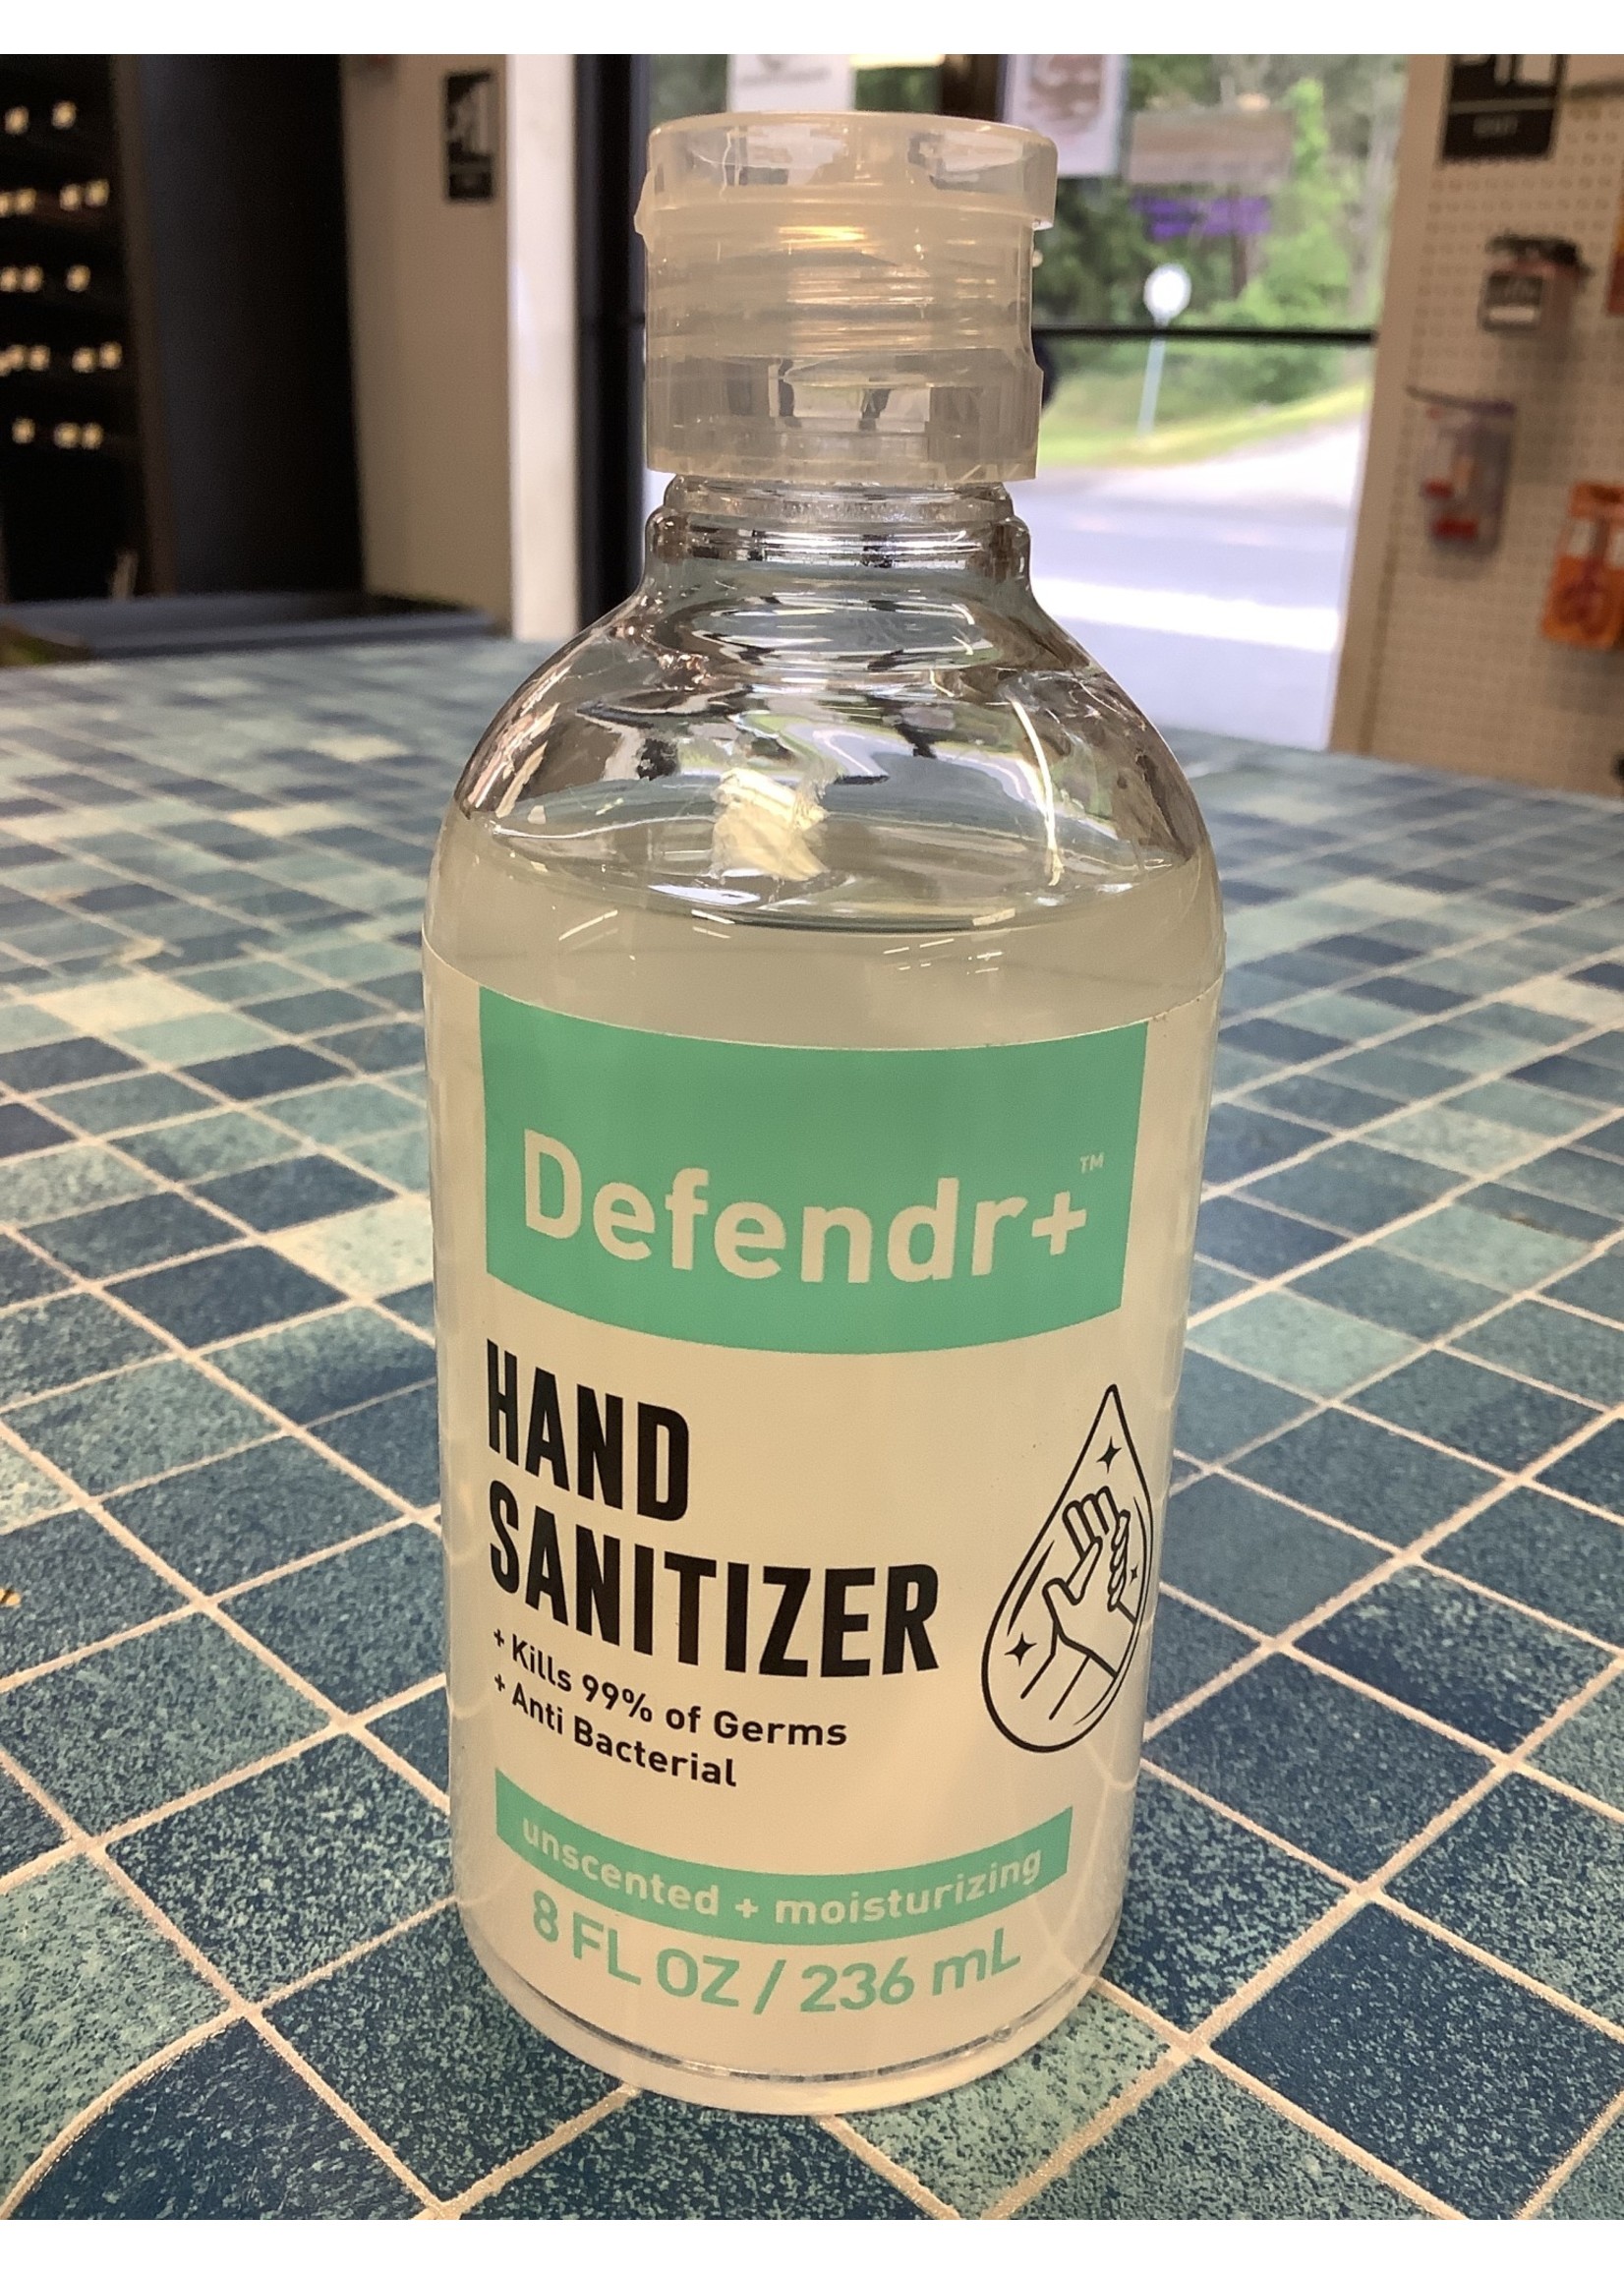 Defendr+ Anti-Bacterial Hand Sanitizer - 8 fl oz